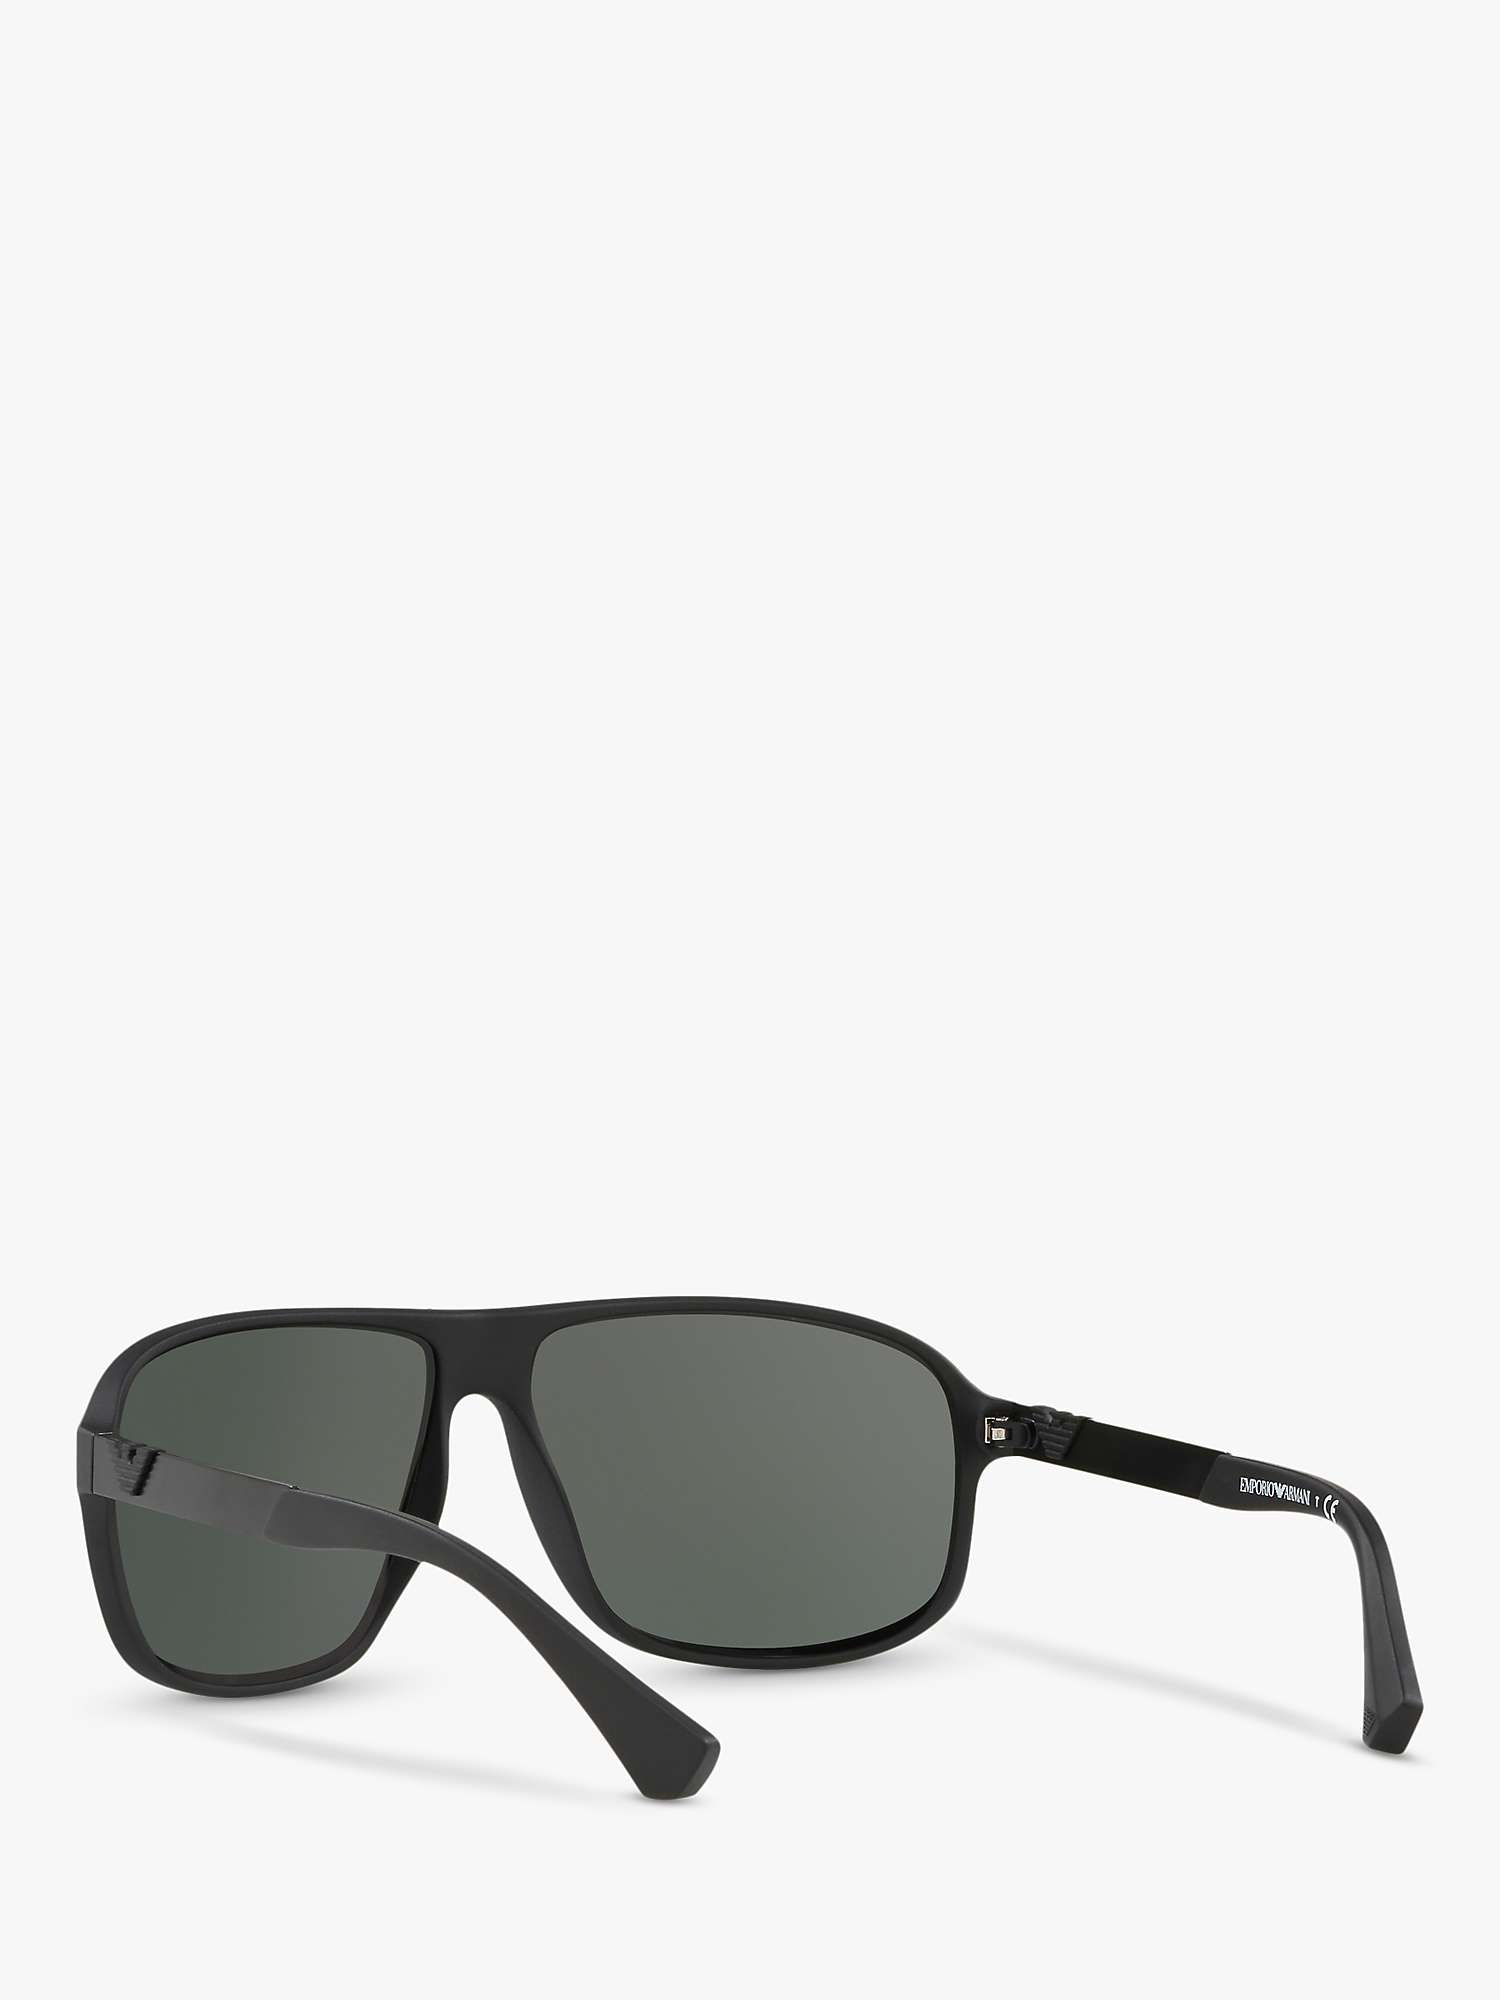 Buy Emporio Armani EA4029 Men's Square Sunglasses, Black/Grey Online at johnlewis.com